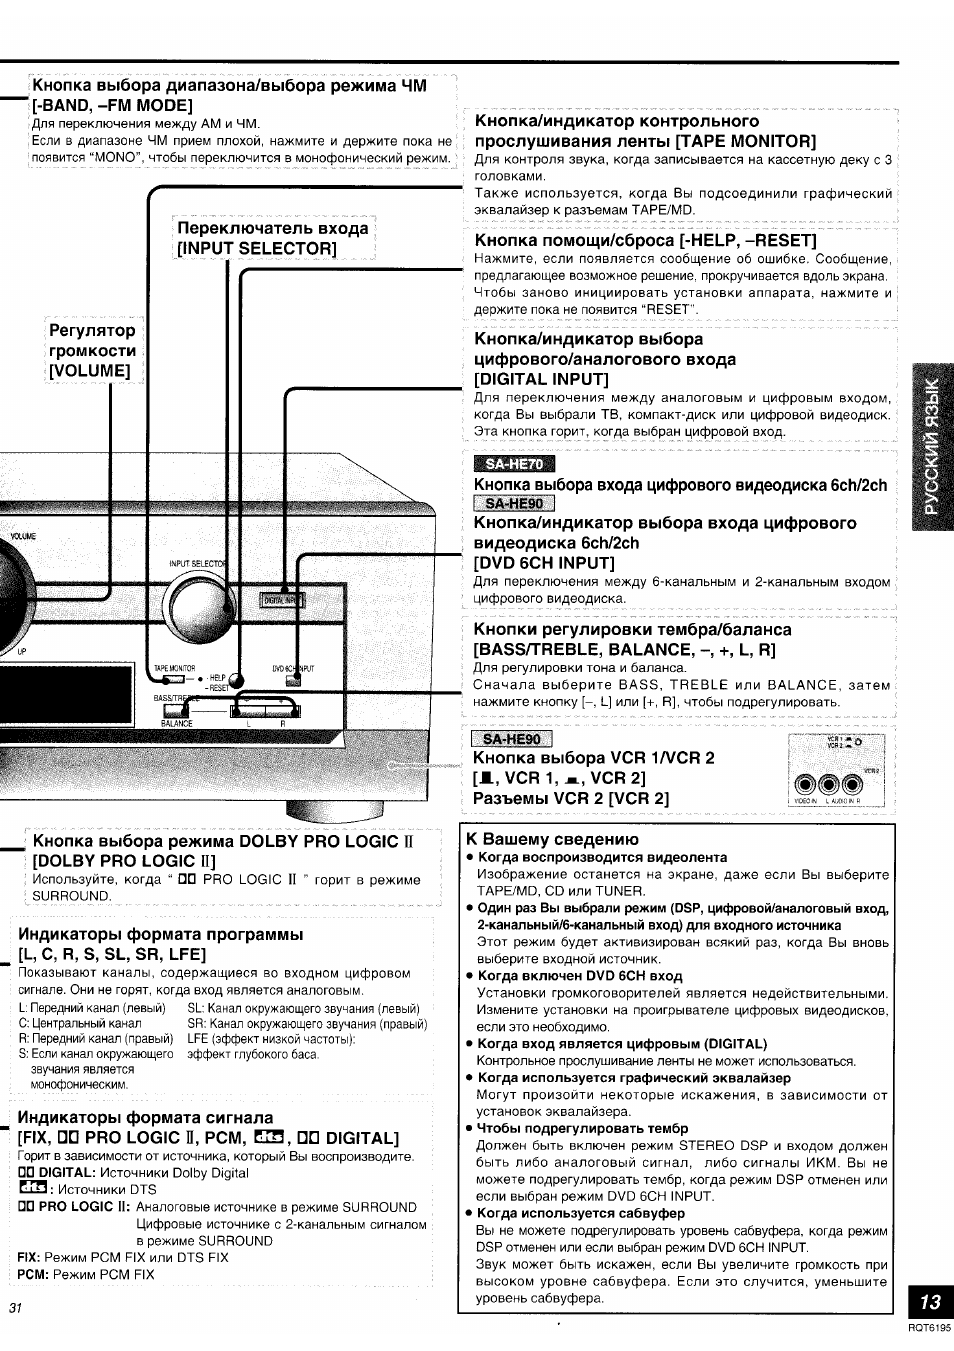 Инструкция по эксплуатации Panasonic SA-HE90 | Страница 13 / 19